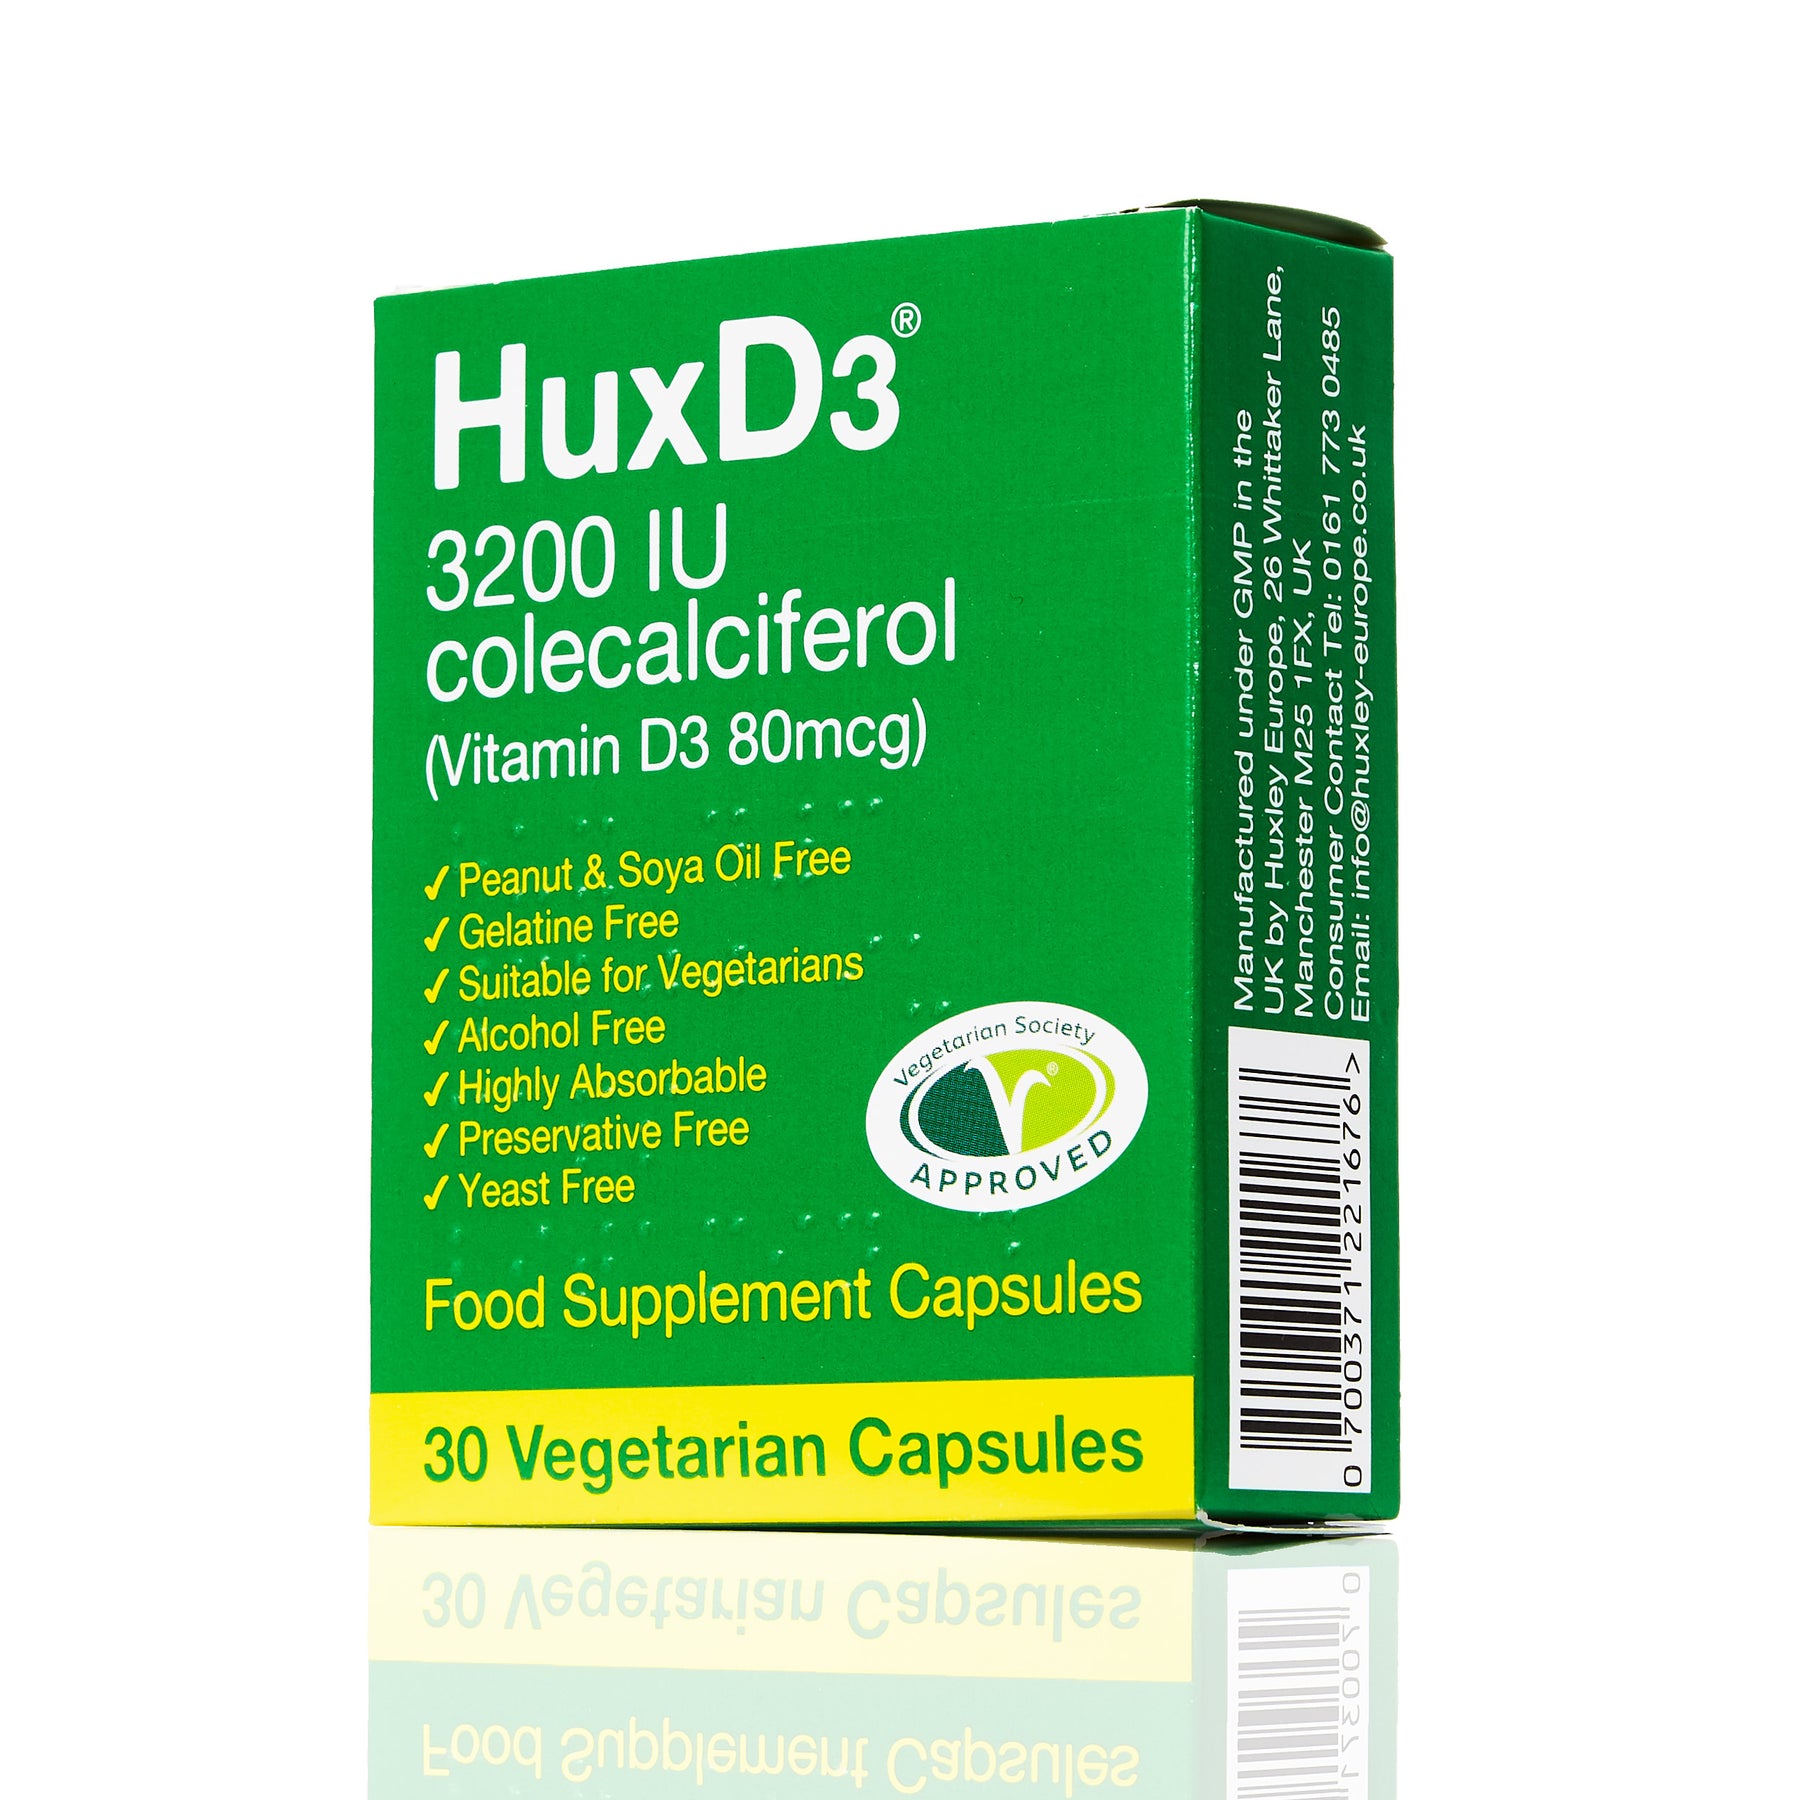 Huxley Europe's Vitamin D3 Supplement